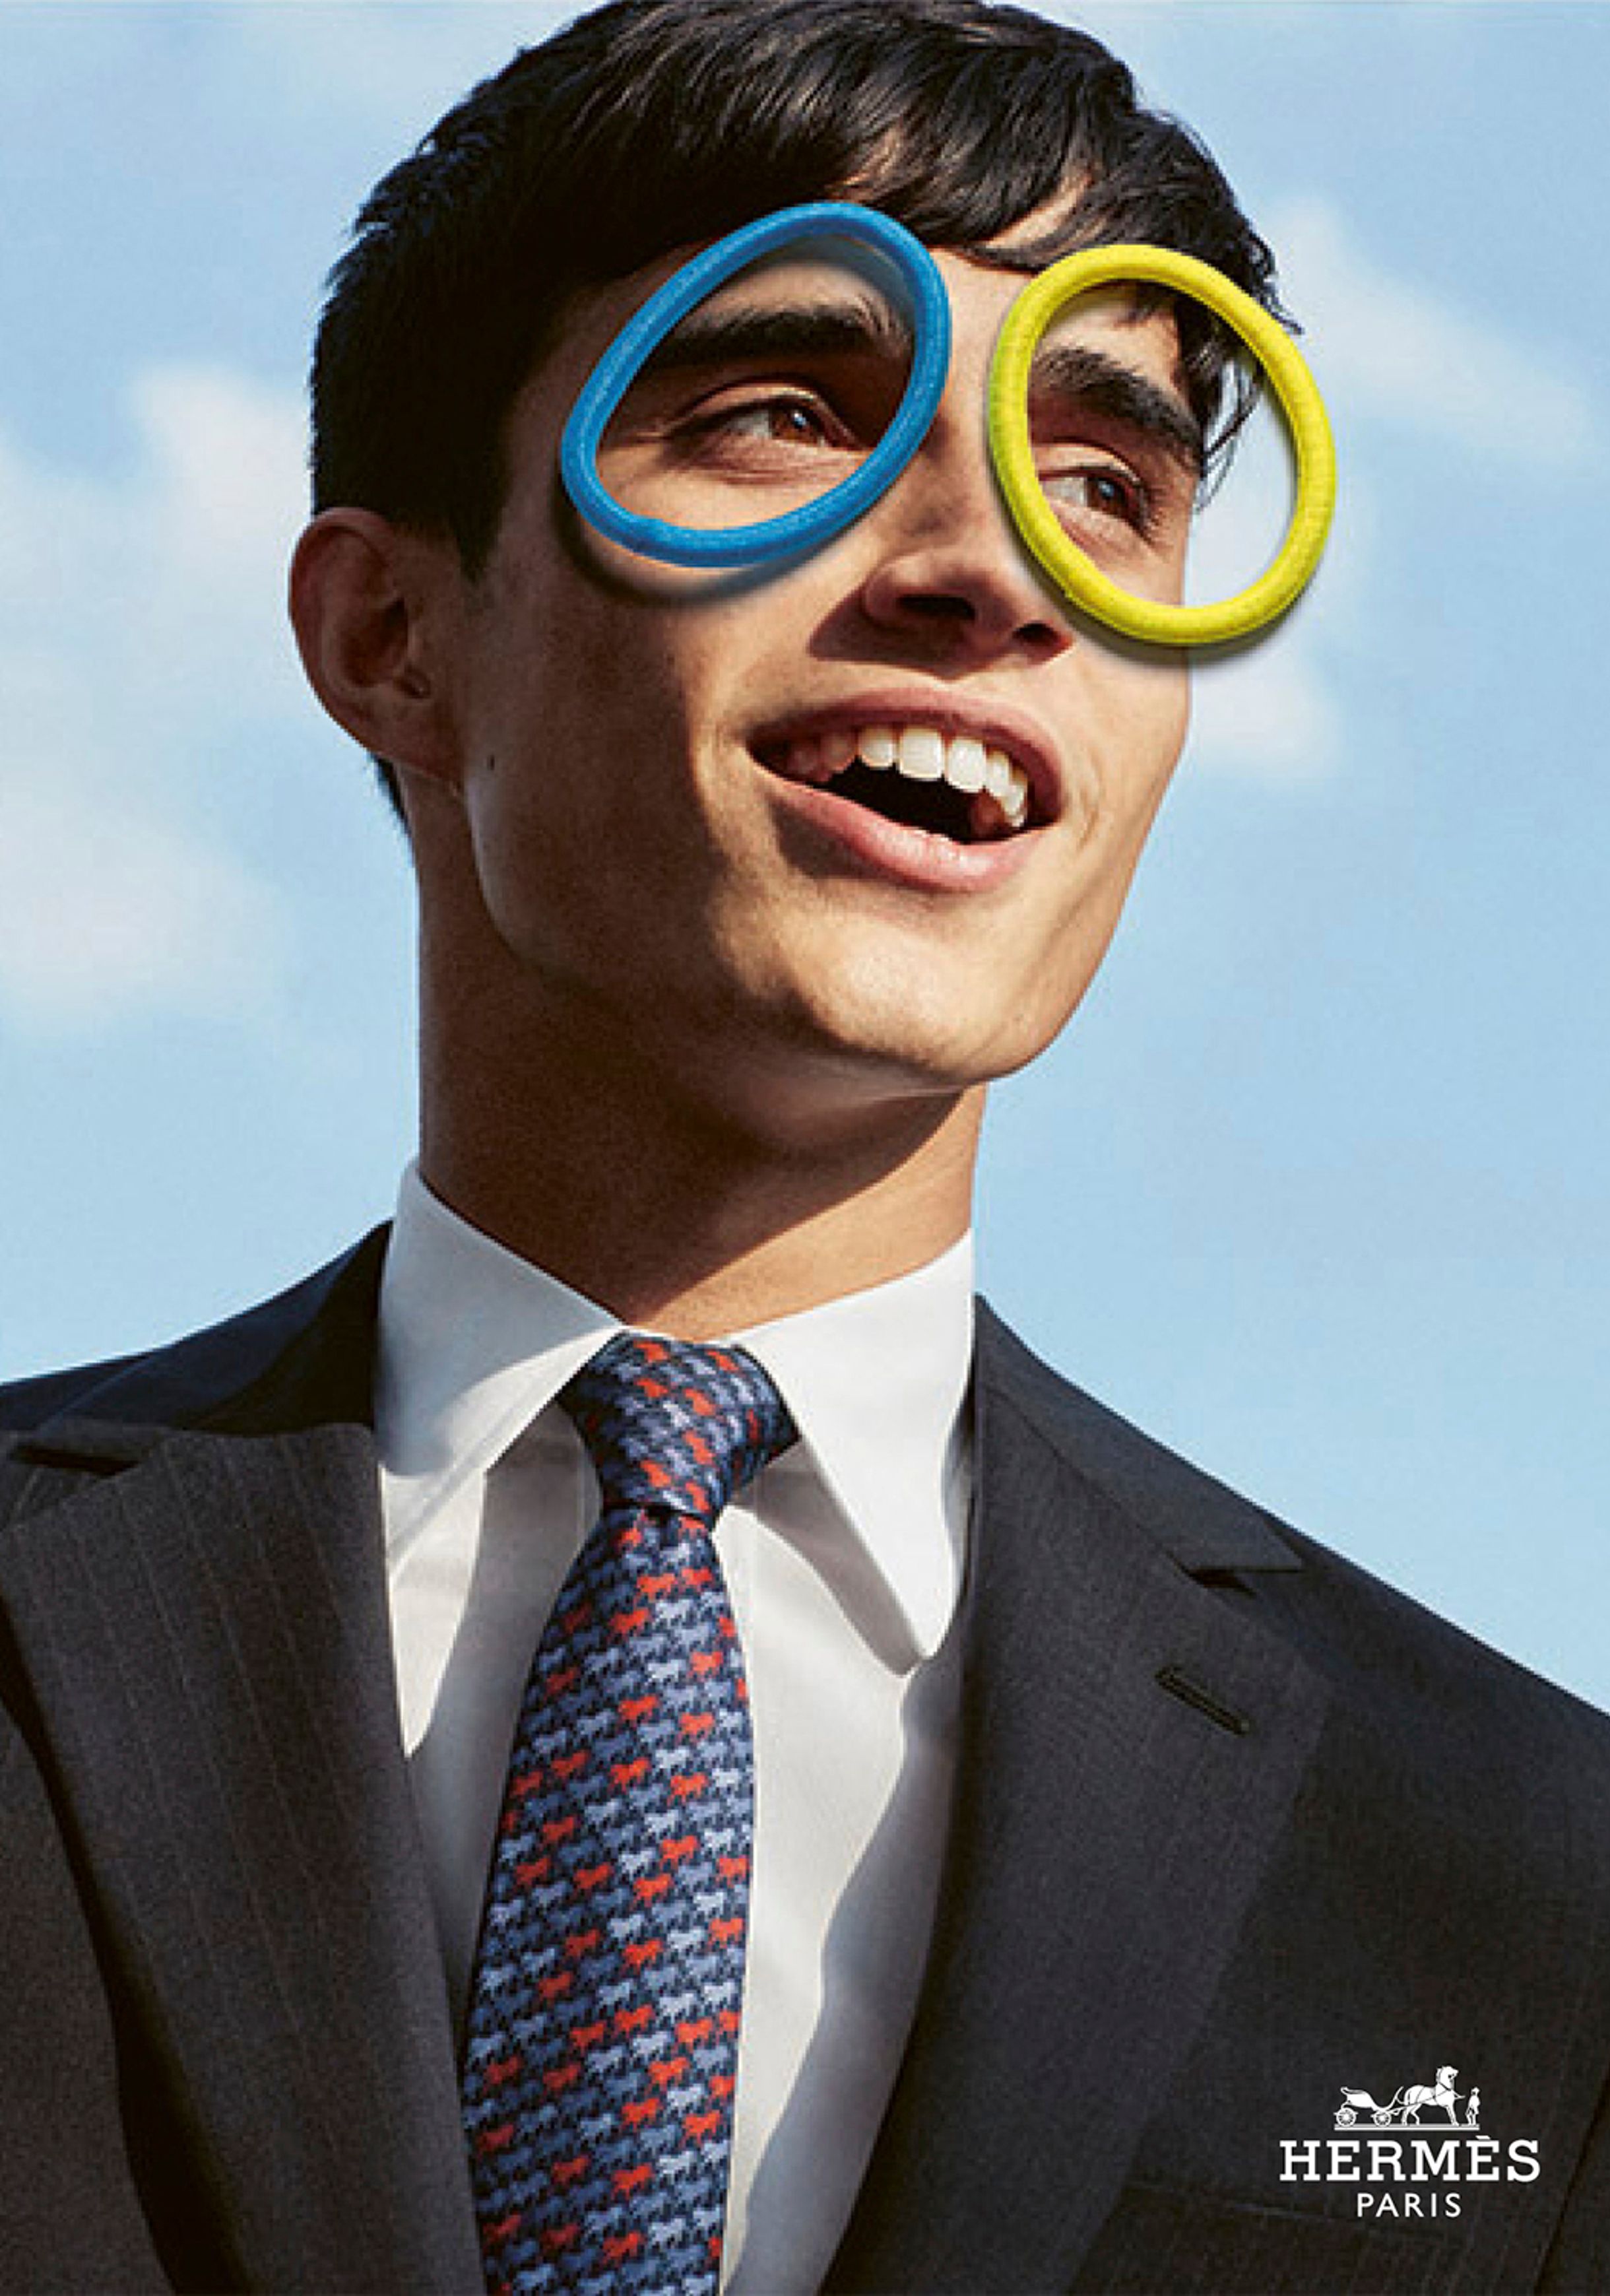 Hermès men's ties campaign, Spring / Summer 2017